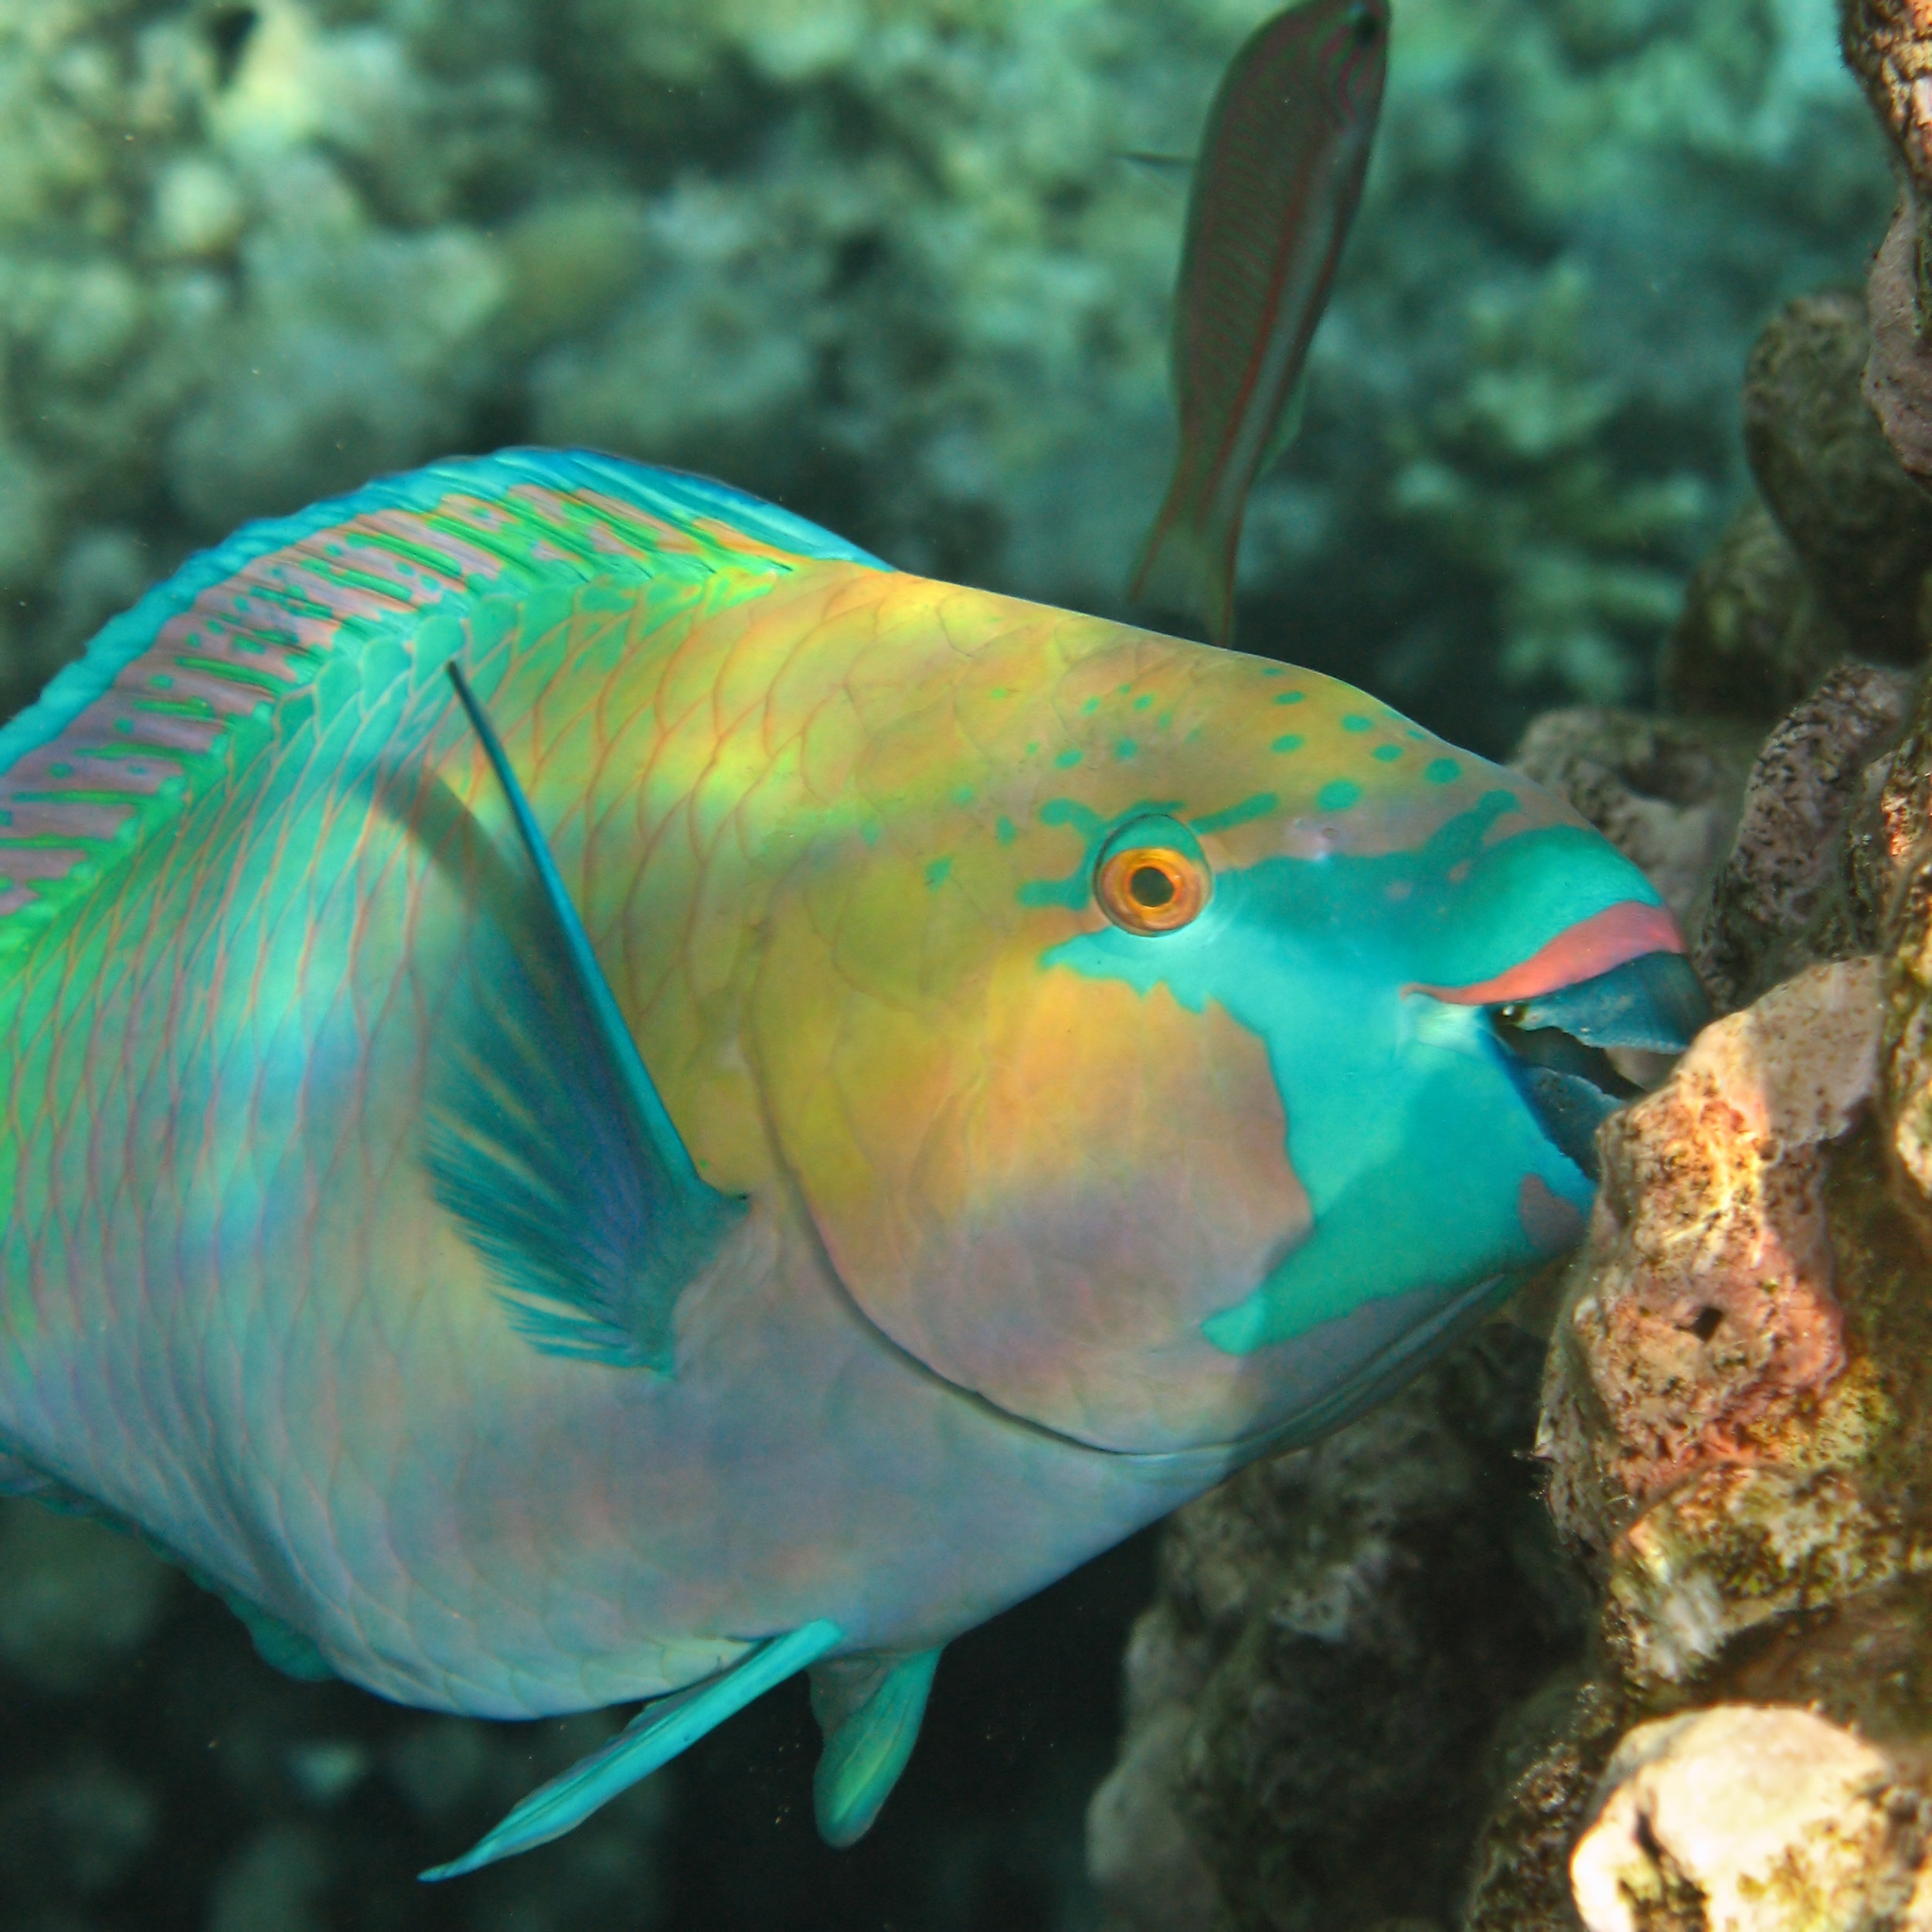 The Parrotfish